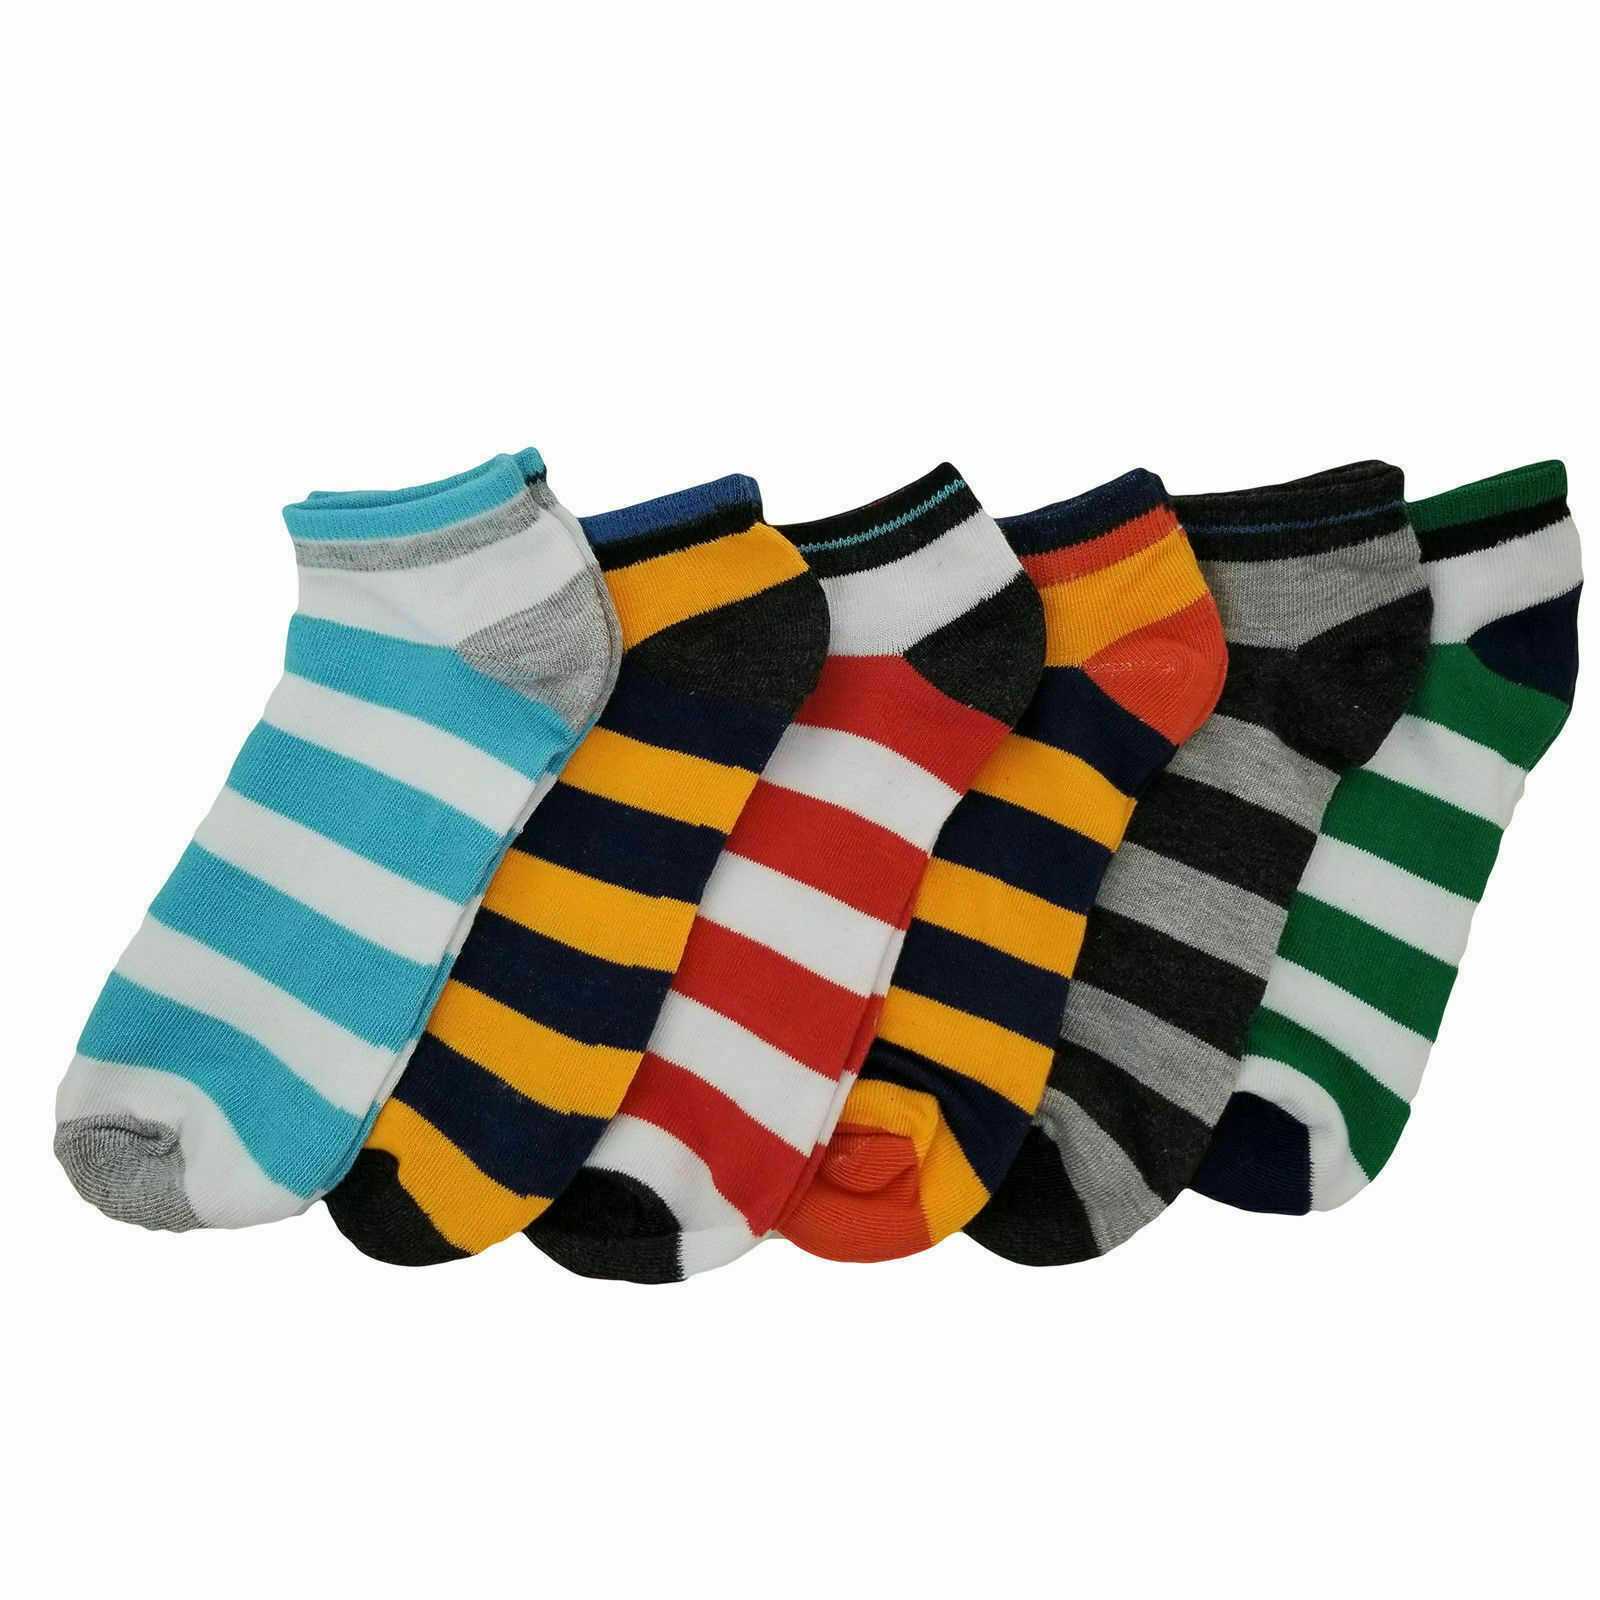 6X Pairs Option 5 Ankle Quarter Socks Men Women Trainer Sports Cotton Liner Uk Size 6-11